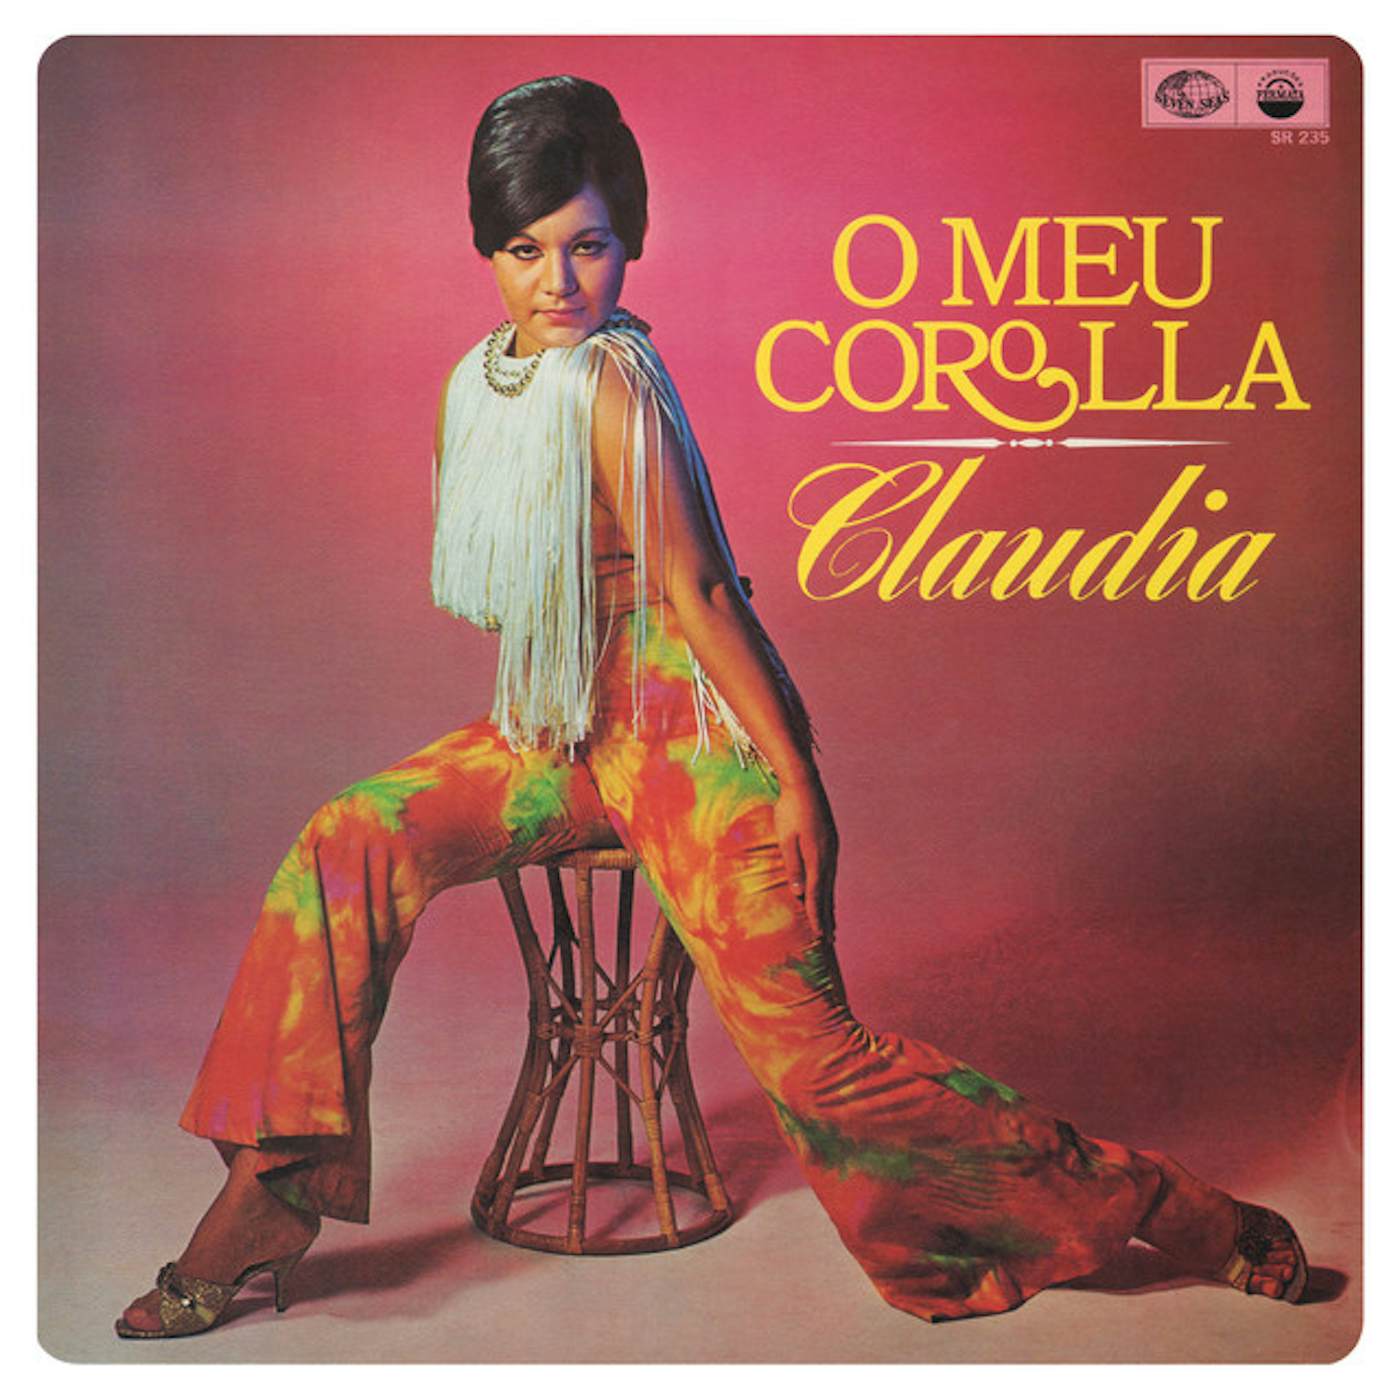 Claudia O MEU COROLLA CD